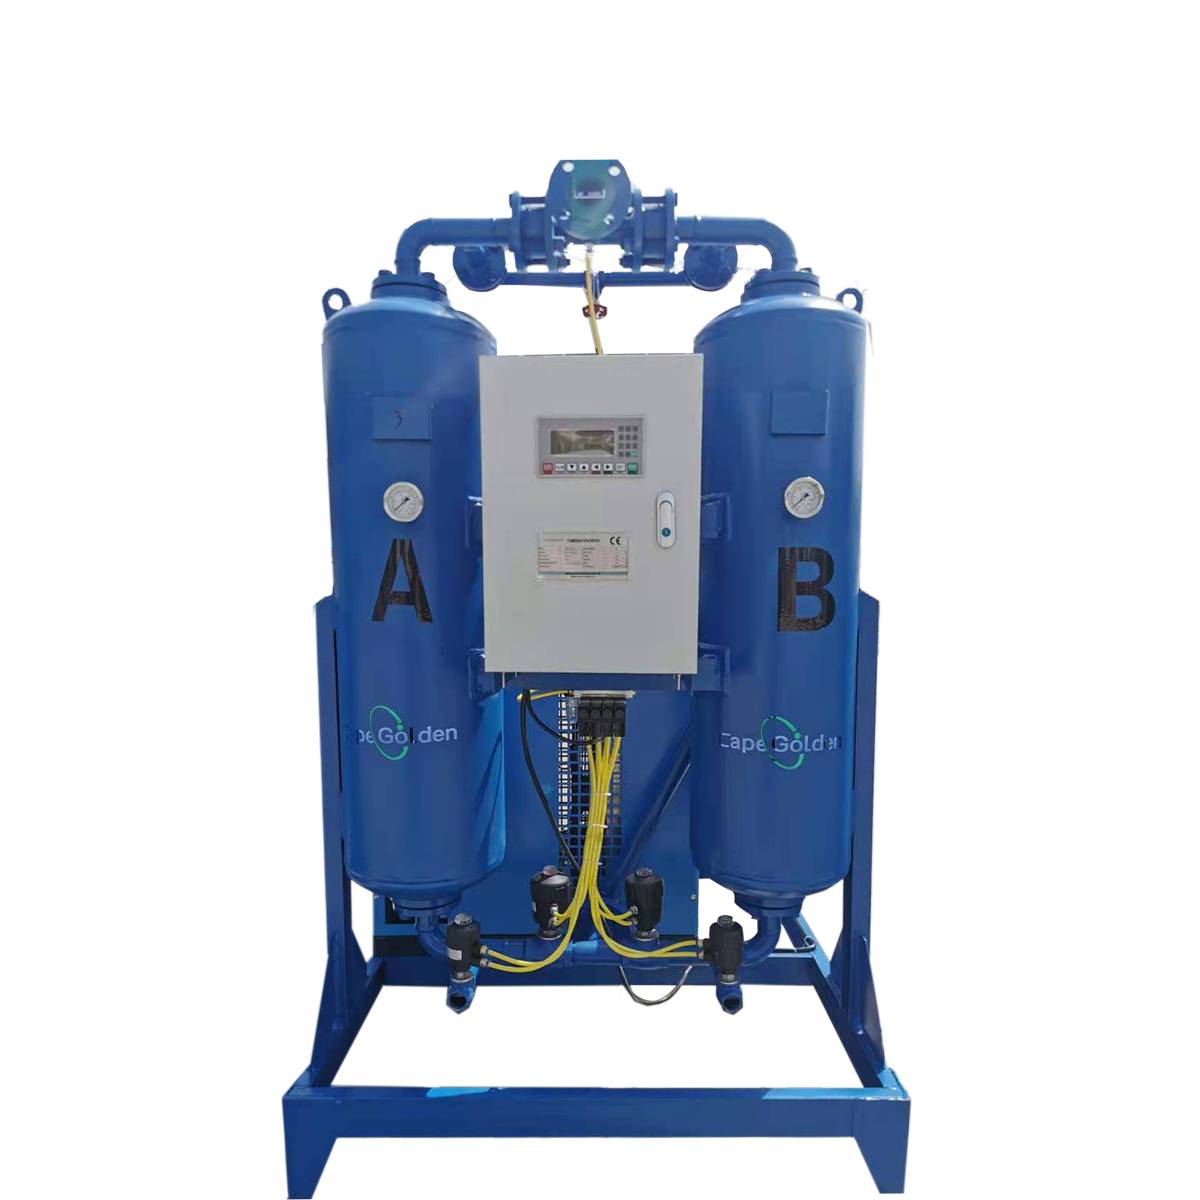 Popular Design for Oxygen Generator For Welding -
 Psa Oxygen generator delivered in 15 days – Cape Golden